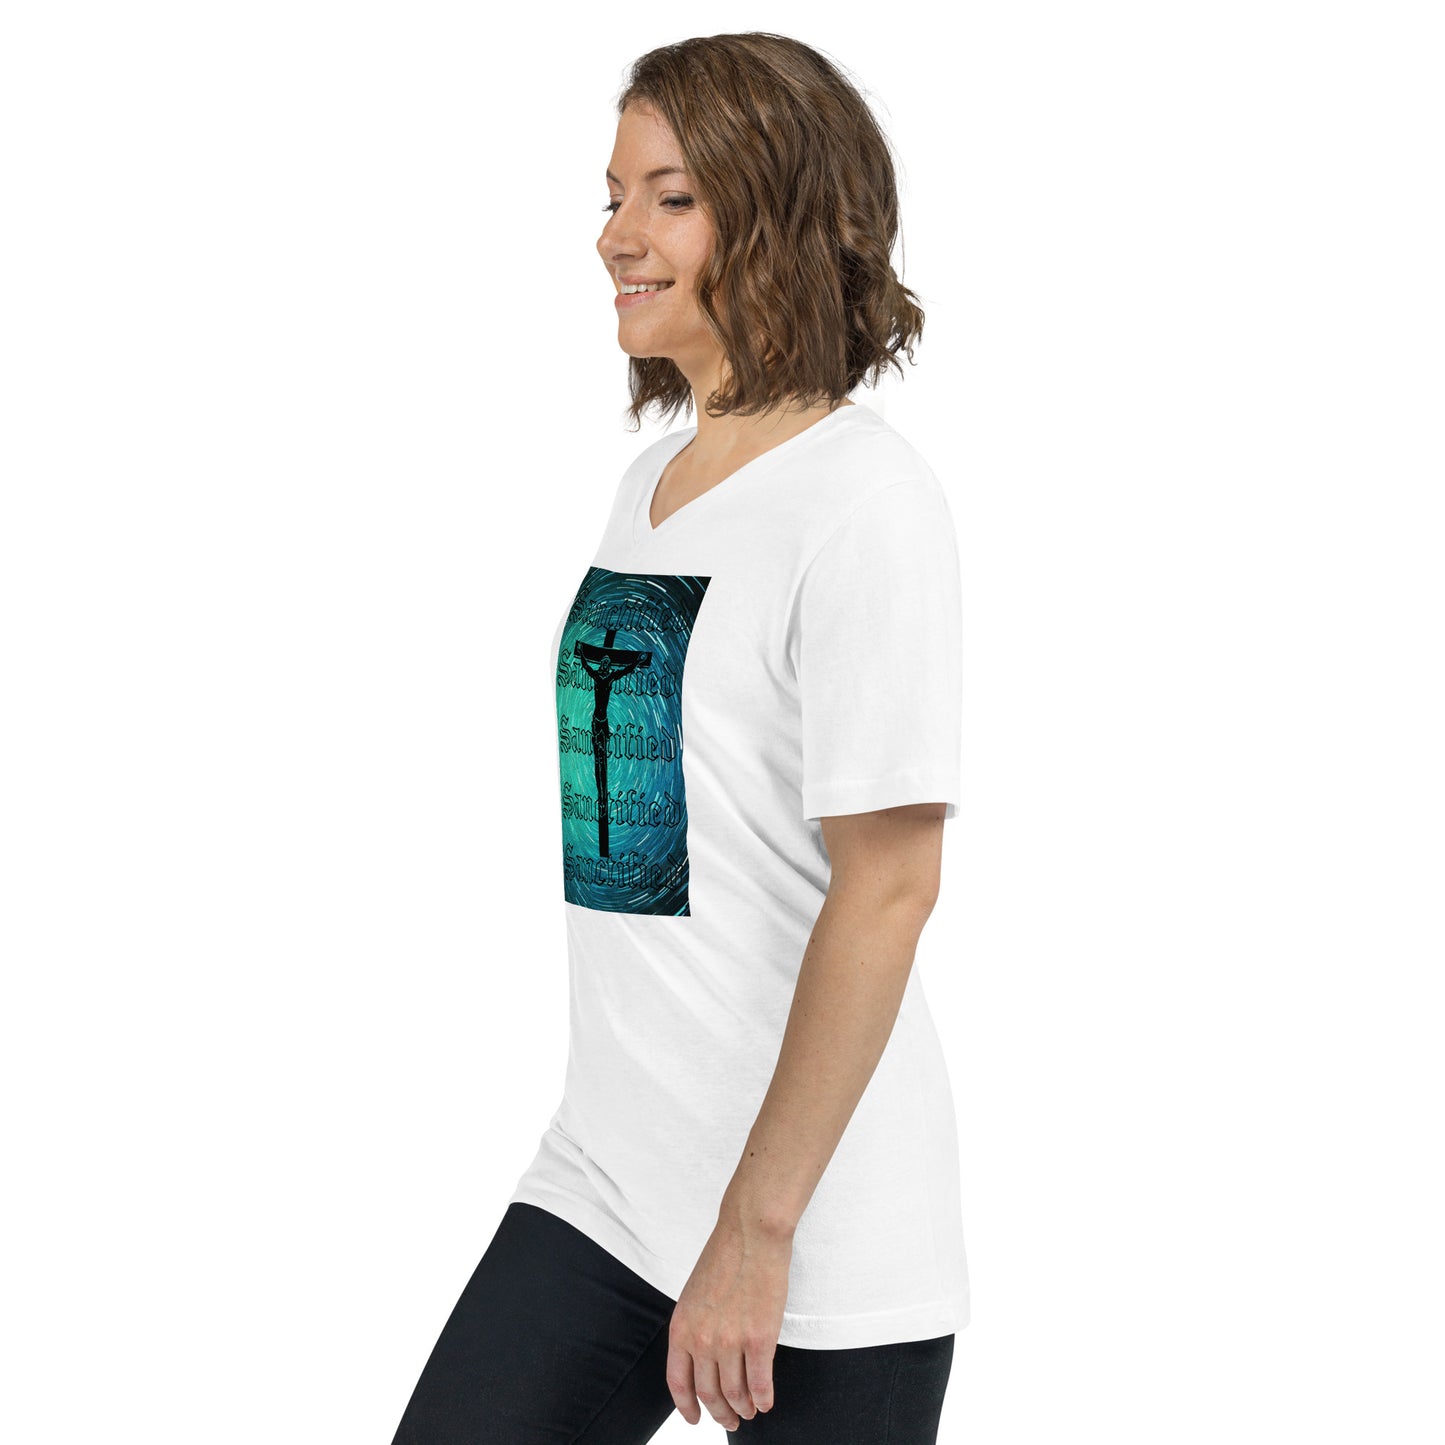 Sanctified- Unisex Short Sleeve V-Neck T-Shirt